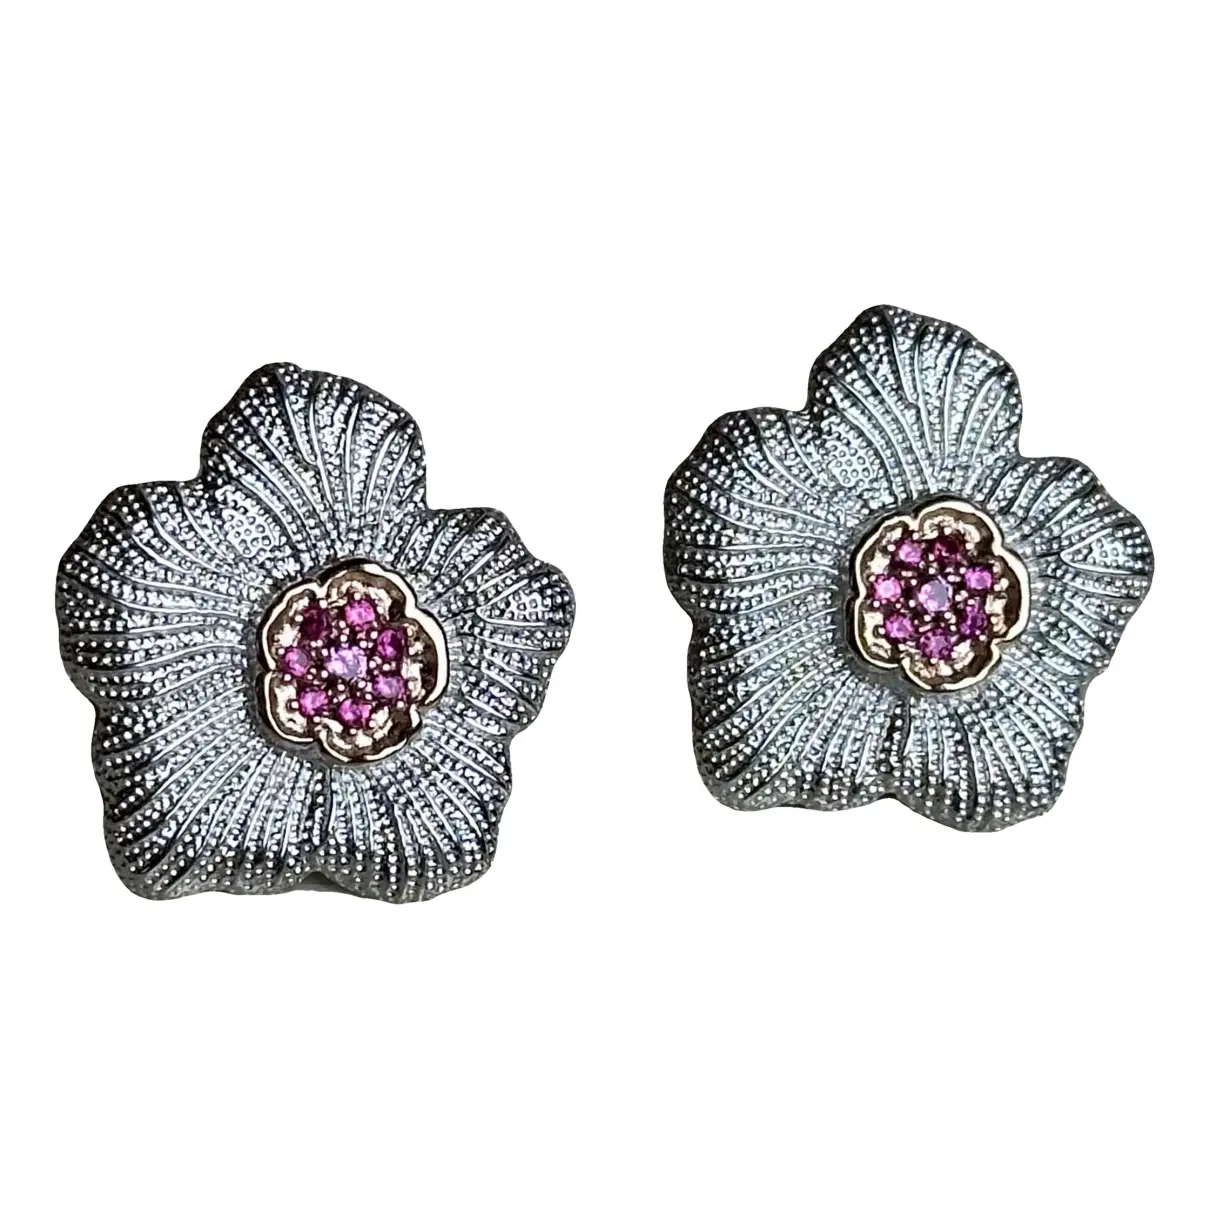 Blossom leather earrings